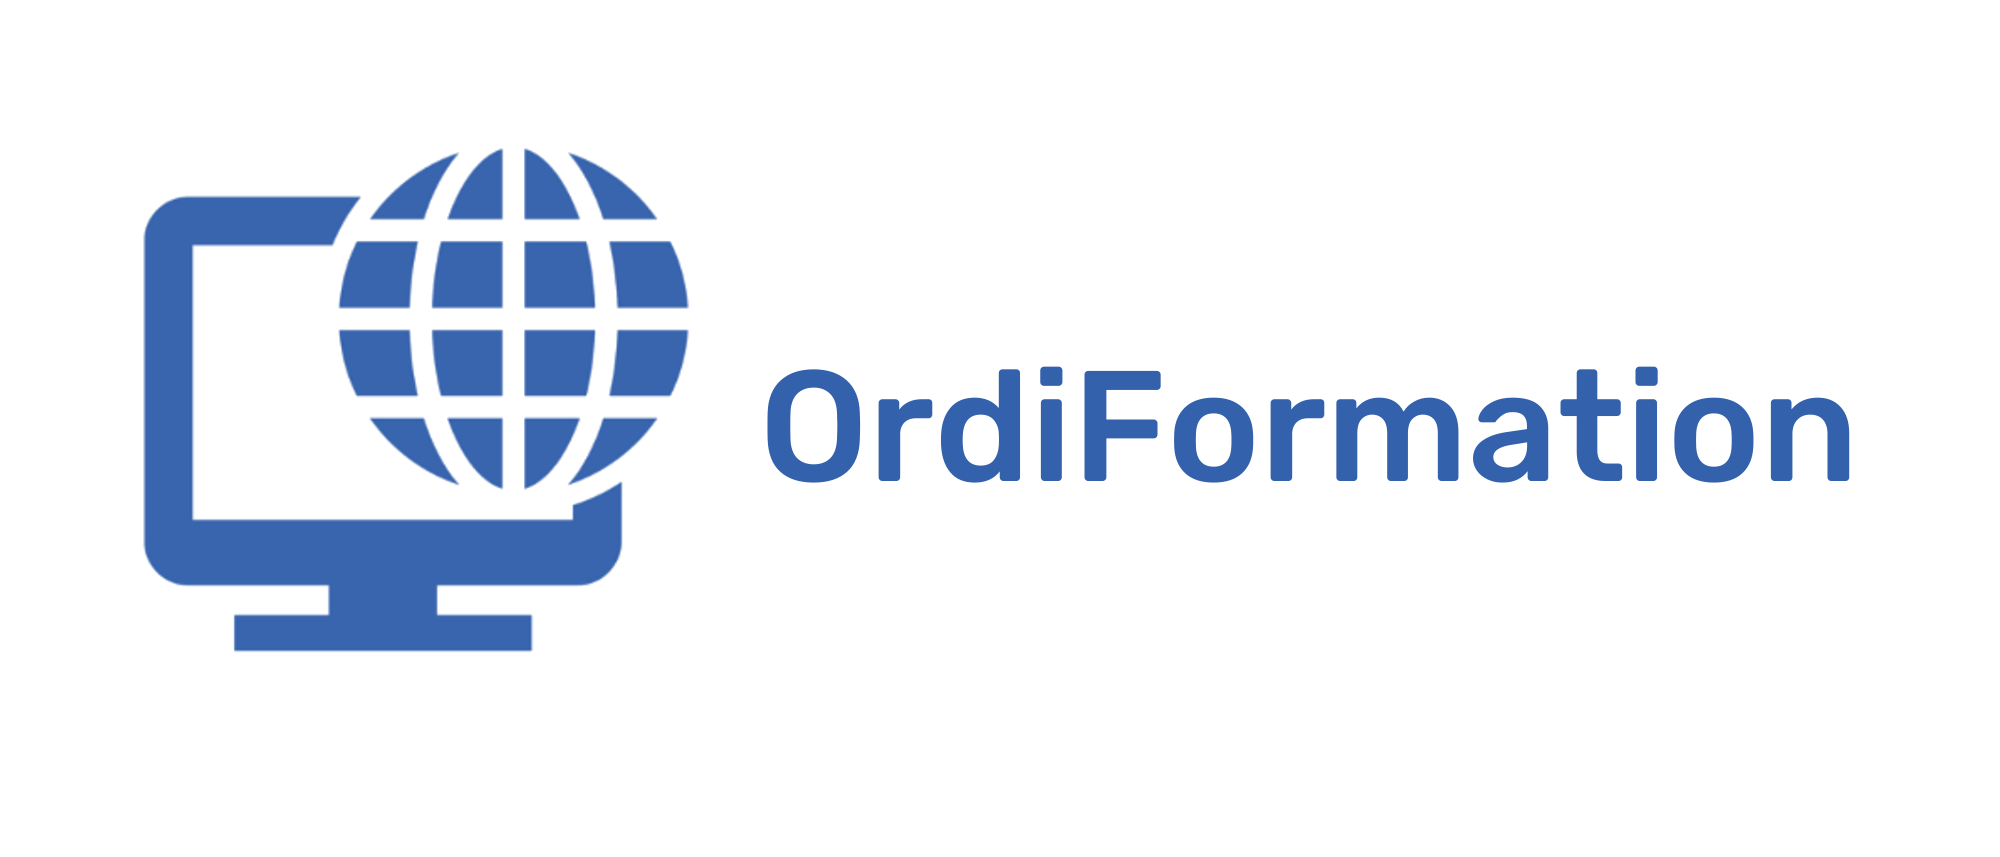 OrdiFormation